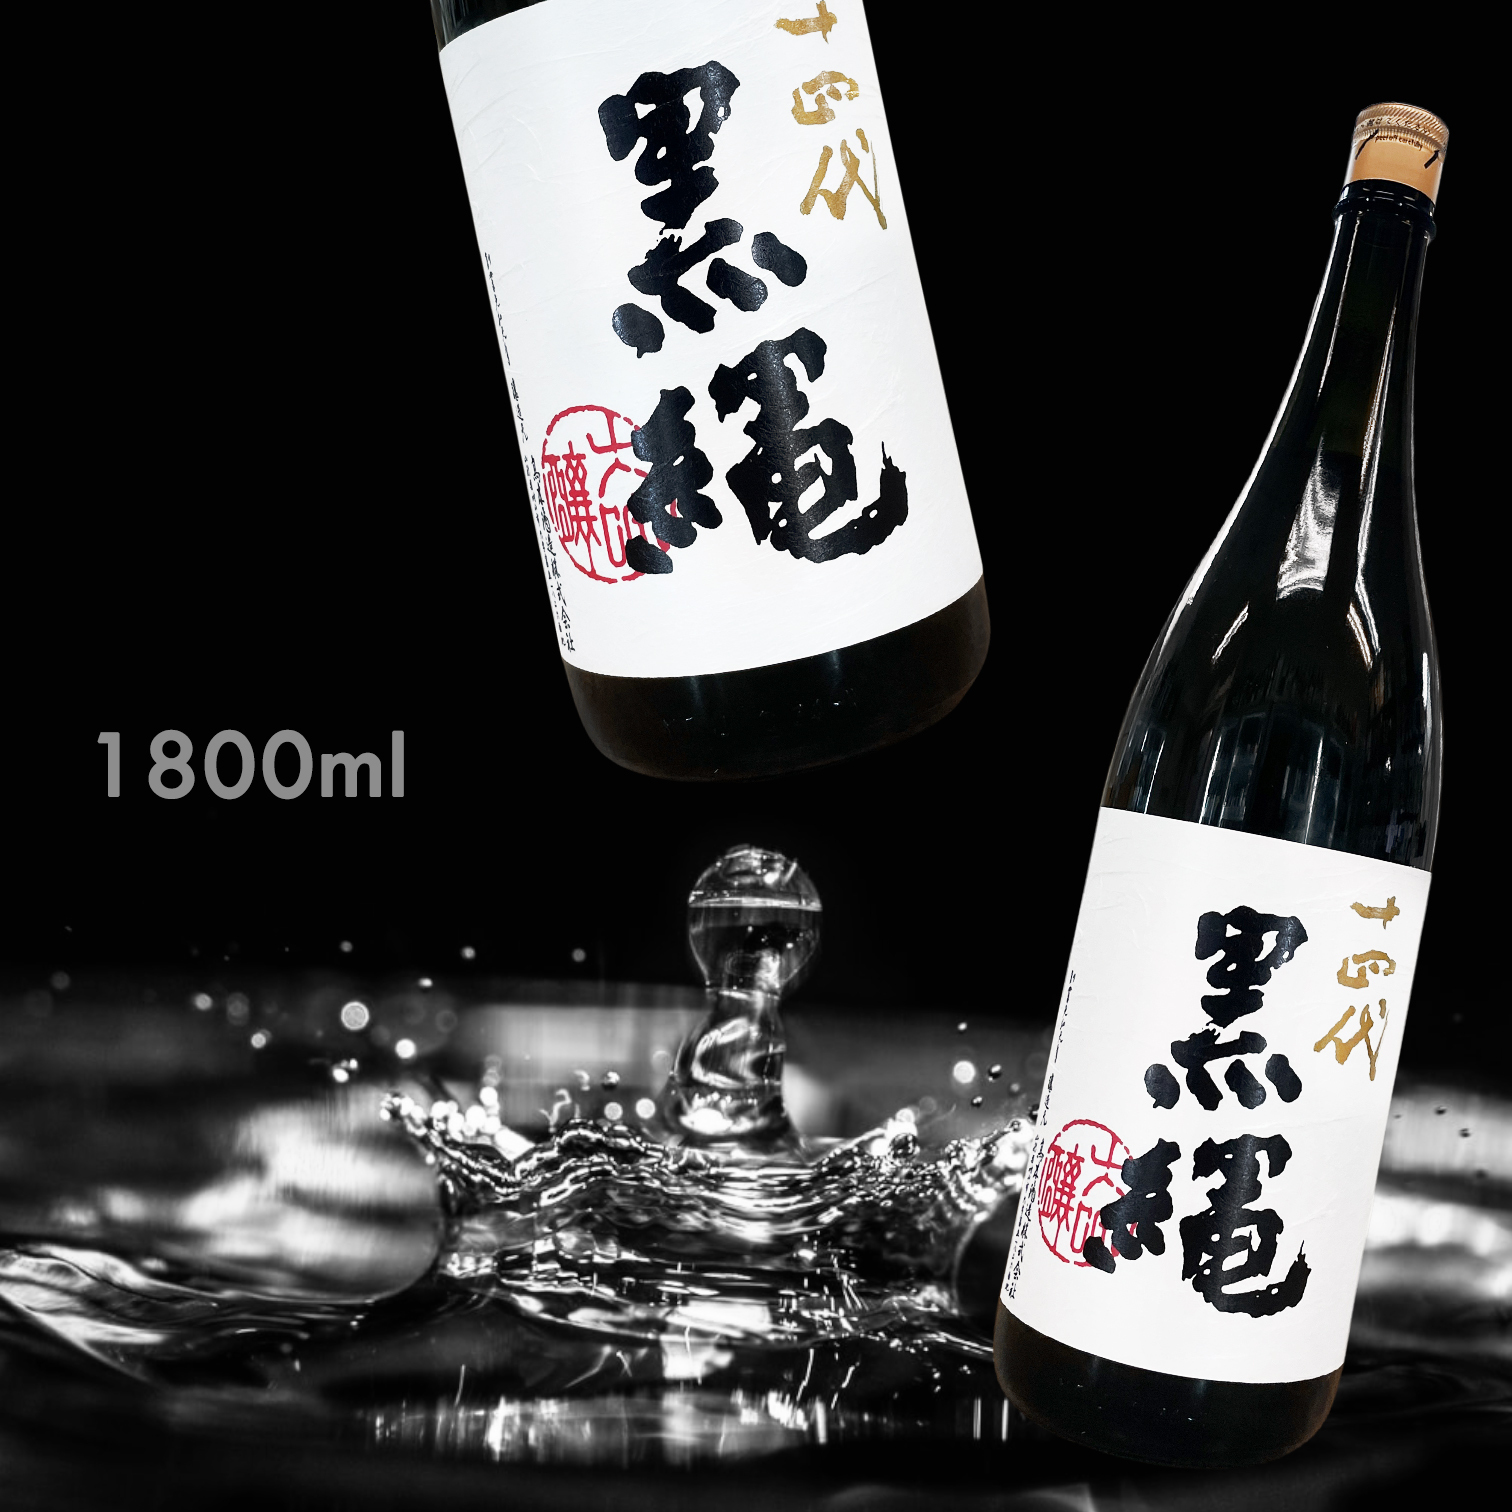 十四代 黒縄 古酒 1800ml - www.mct.net.sa